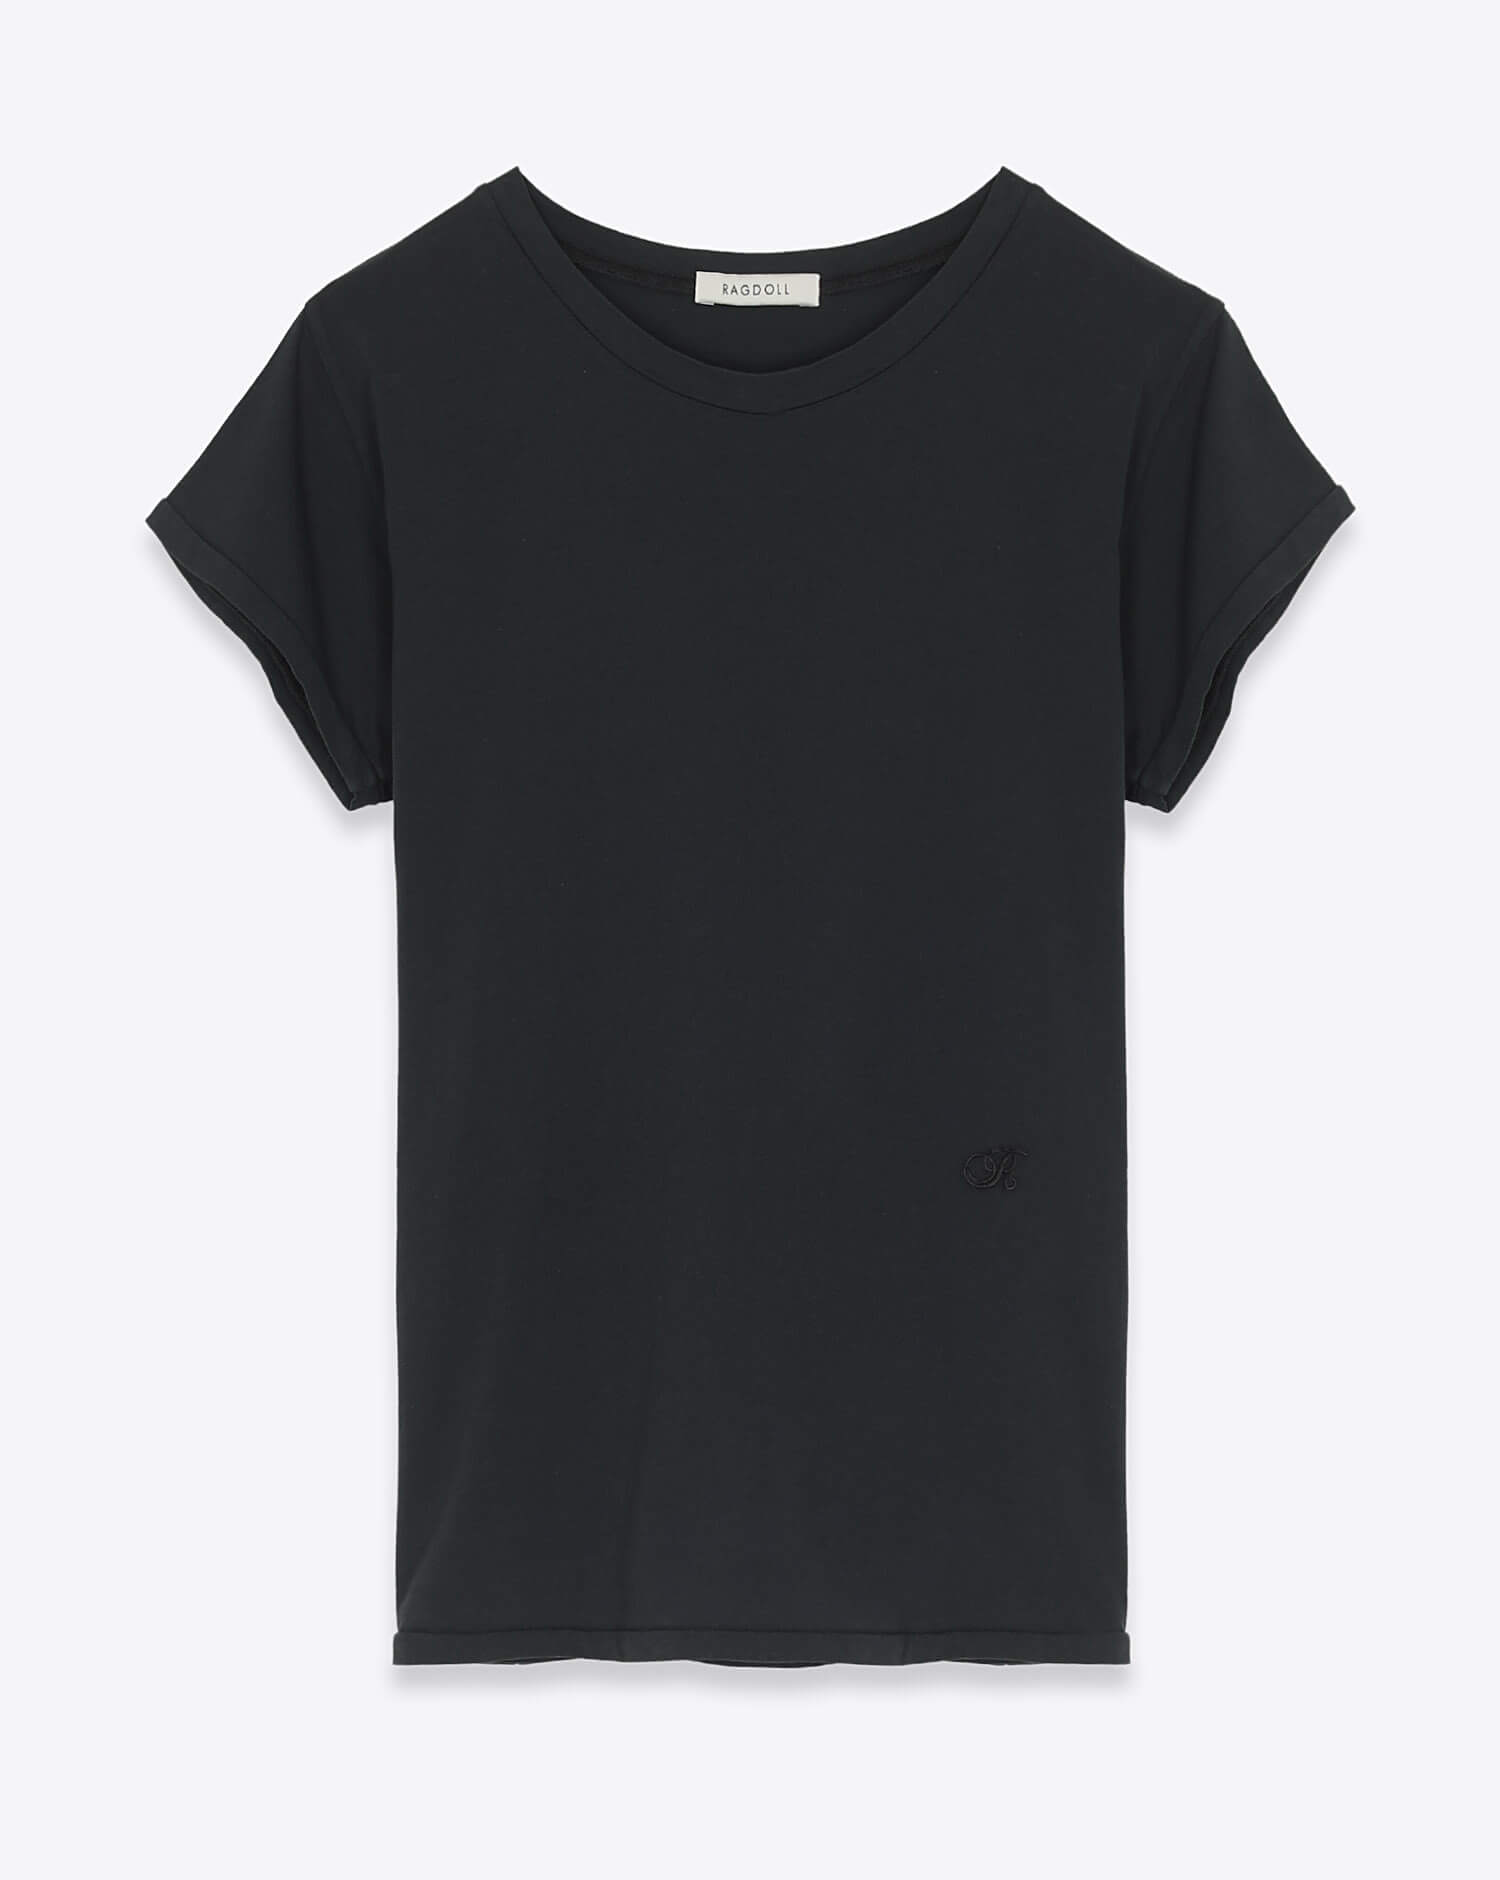 Tee-shirt noir en coton Vintage tee Ragdoll LA